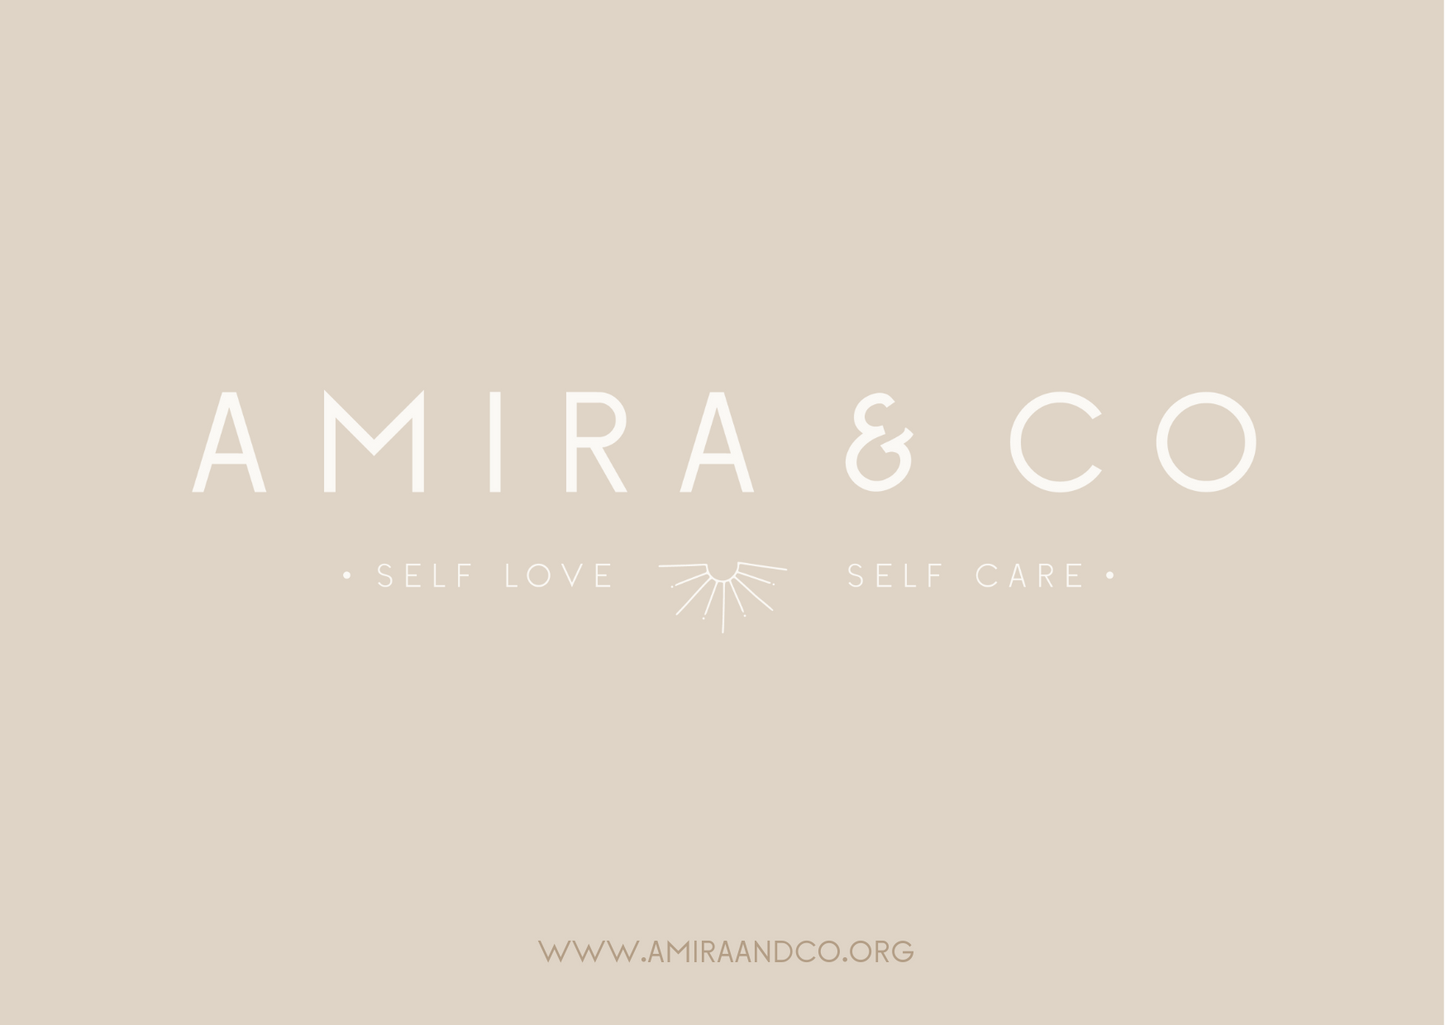 AMIRA & CO GIFT VOUCHER